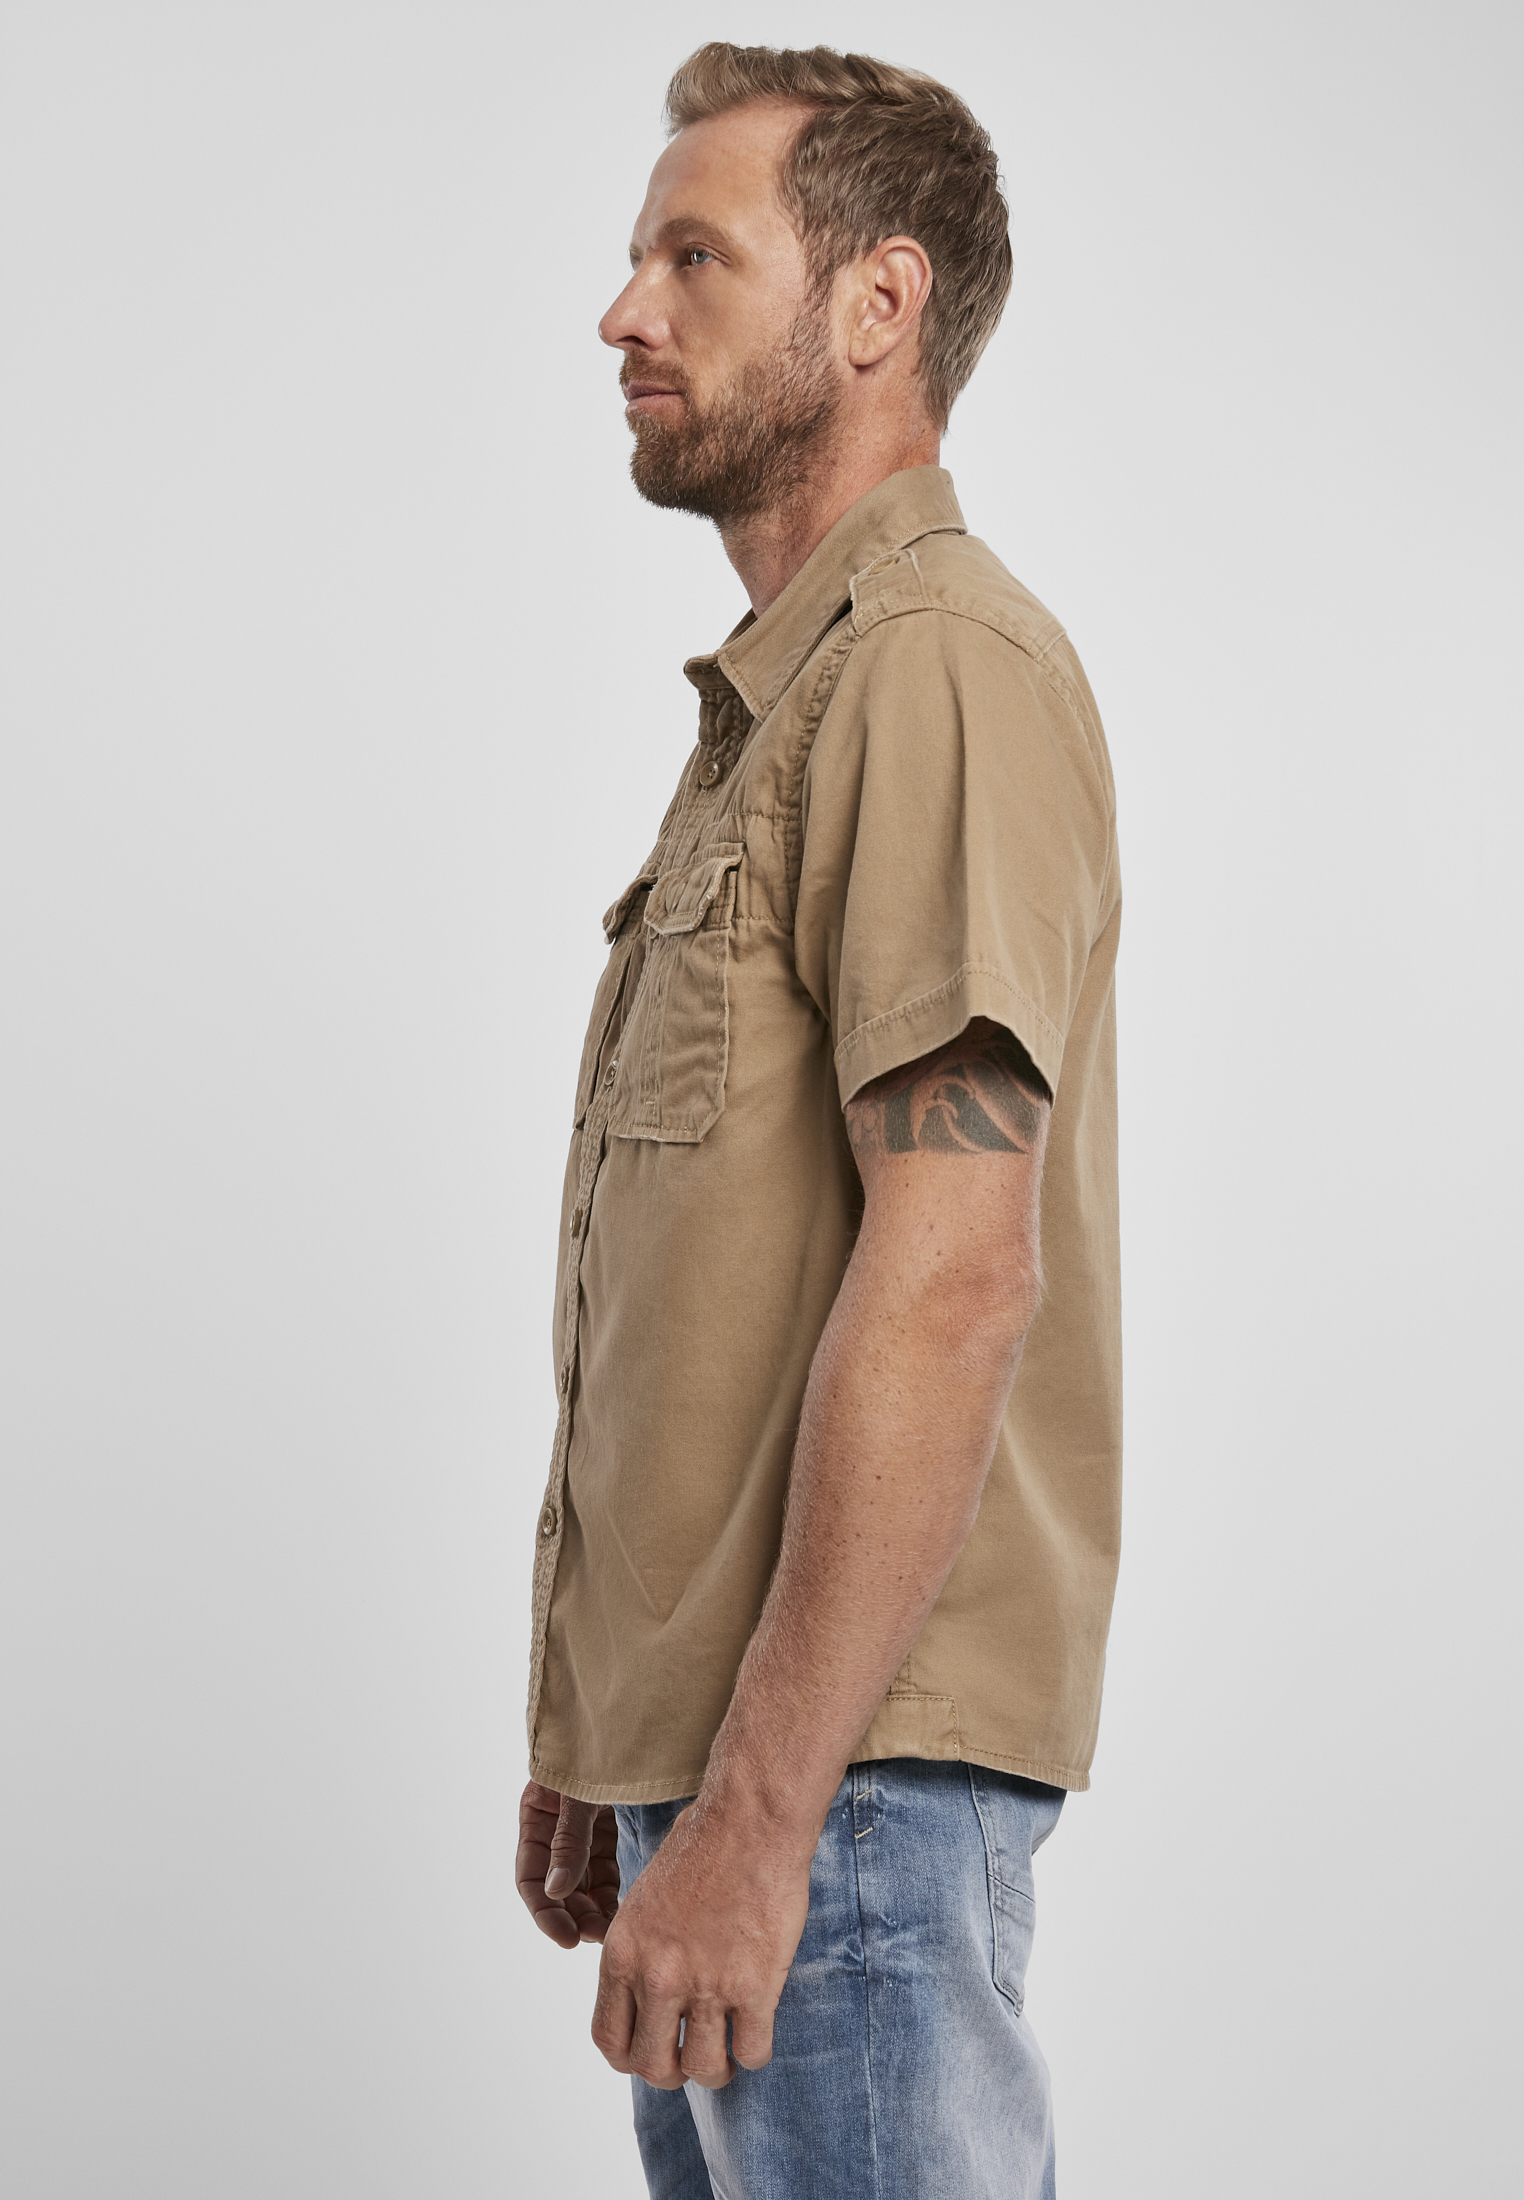 Hemden Vintage Shirt shortsleeve in Farbe camel